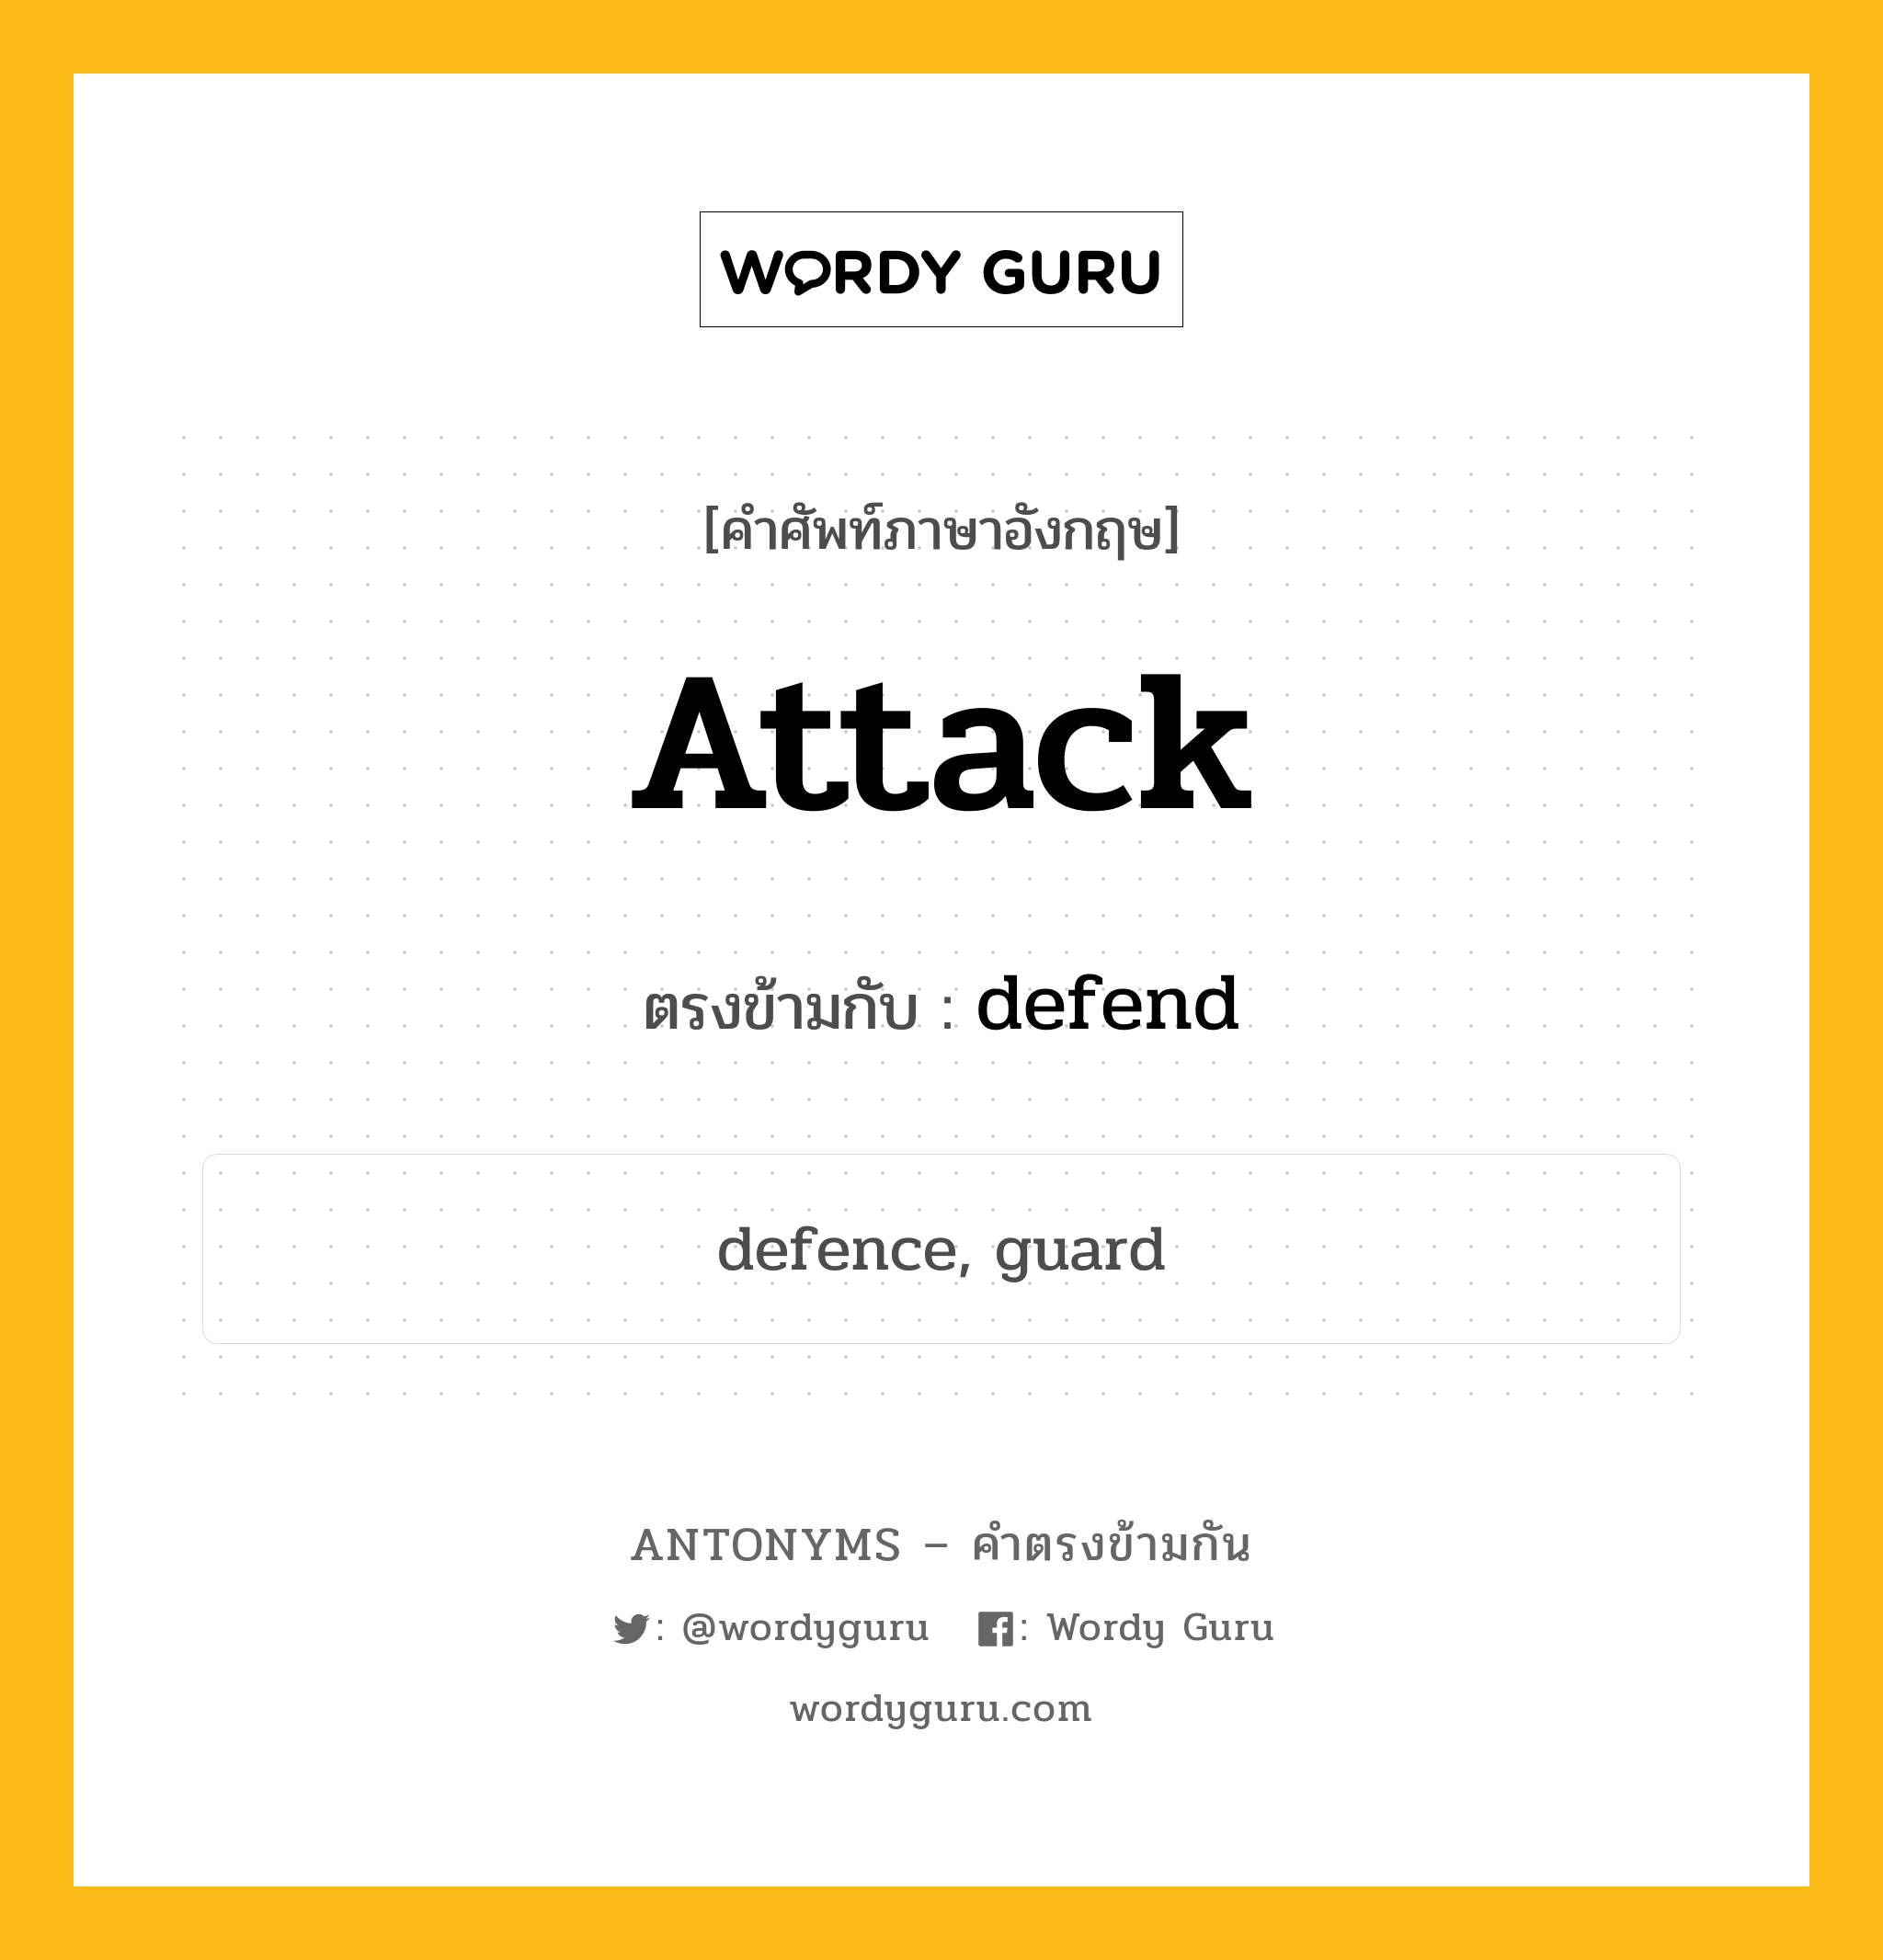 attack เป็นคำตรงข้ามกับคำไหนบ้าง?, คำศัพท์ภาษาอังกฤษ attack ตรงข้ามกับ defend หมวด defend